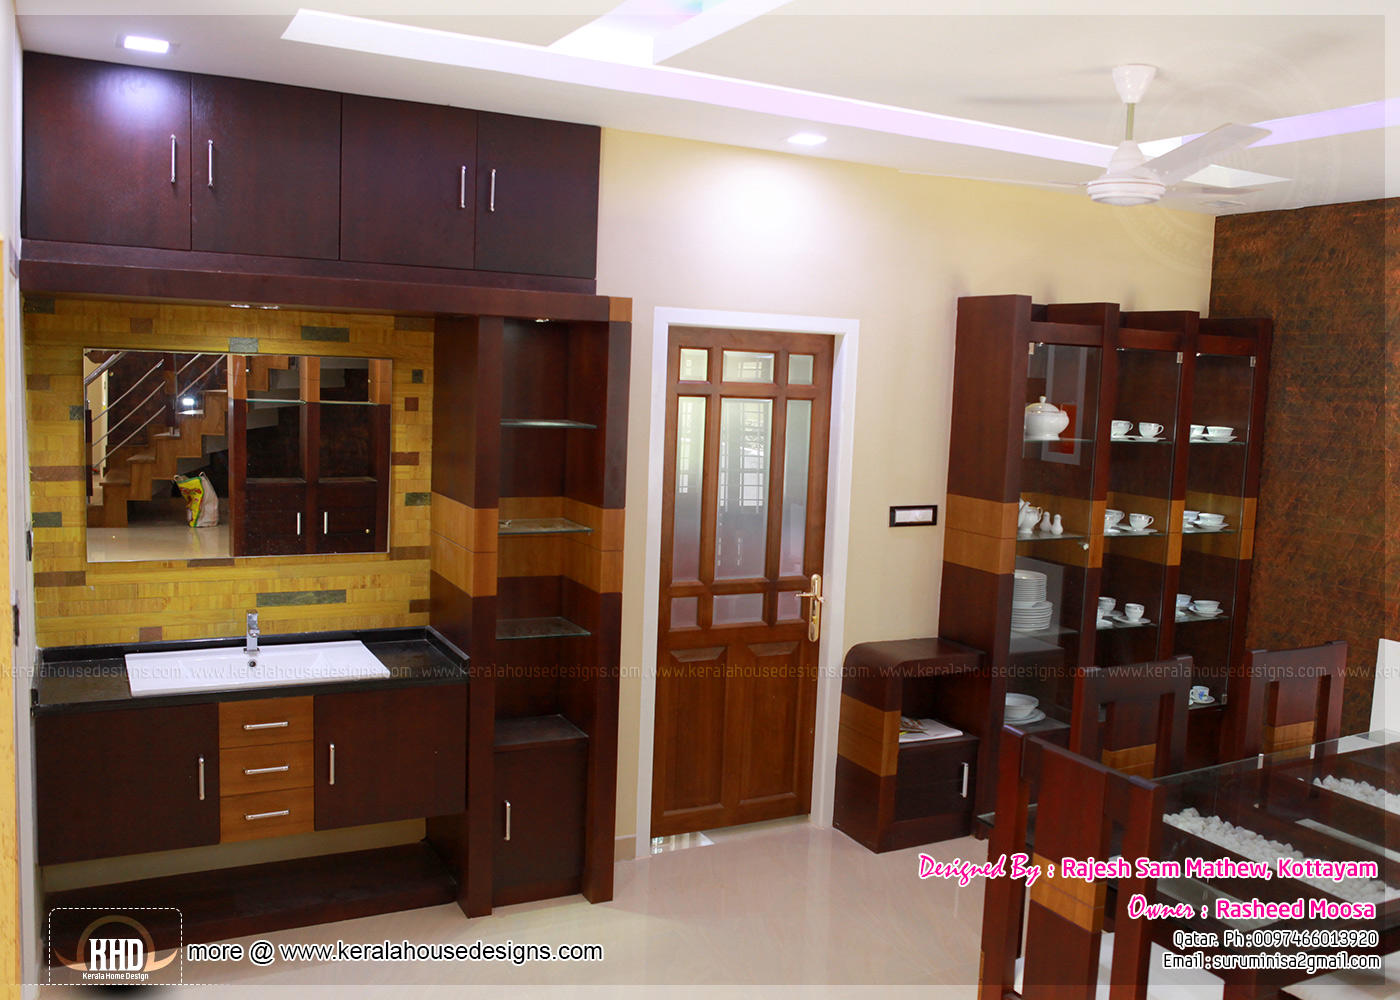 Kerala interior design with photos - Kerala home design and floor ...  Kitchen interior